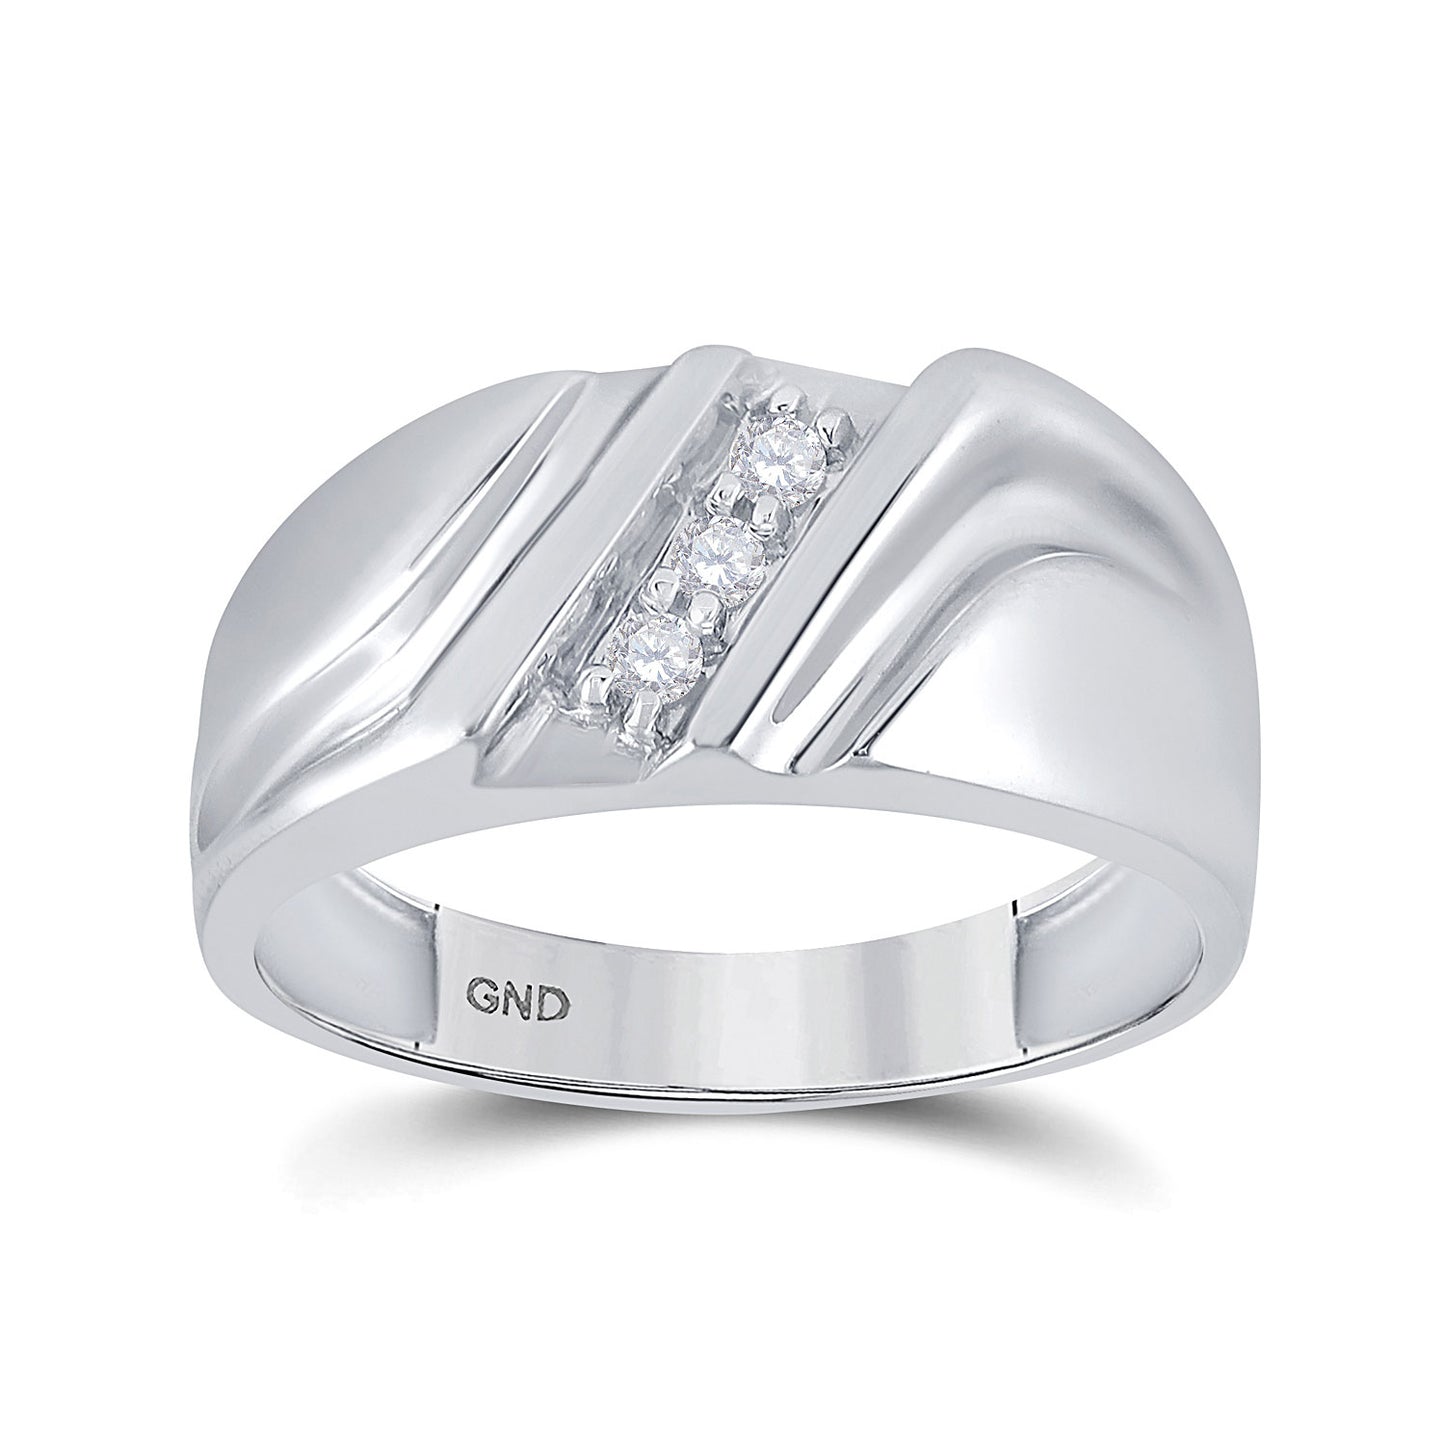 10KT WHITE GOLD MENS ROUND DIAMOND WEDDING SINGLE ROW BAND RING 1/10 CTTW